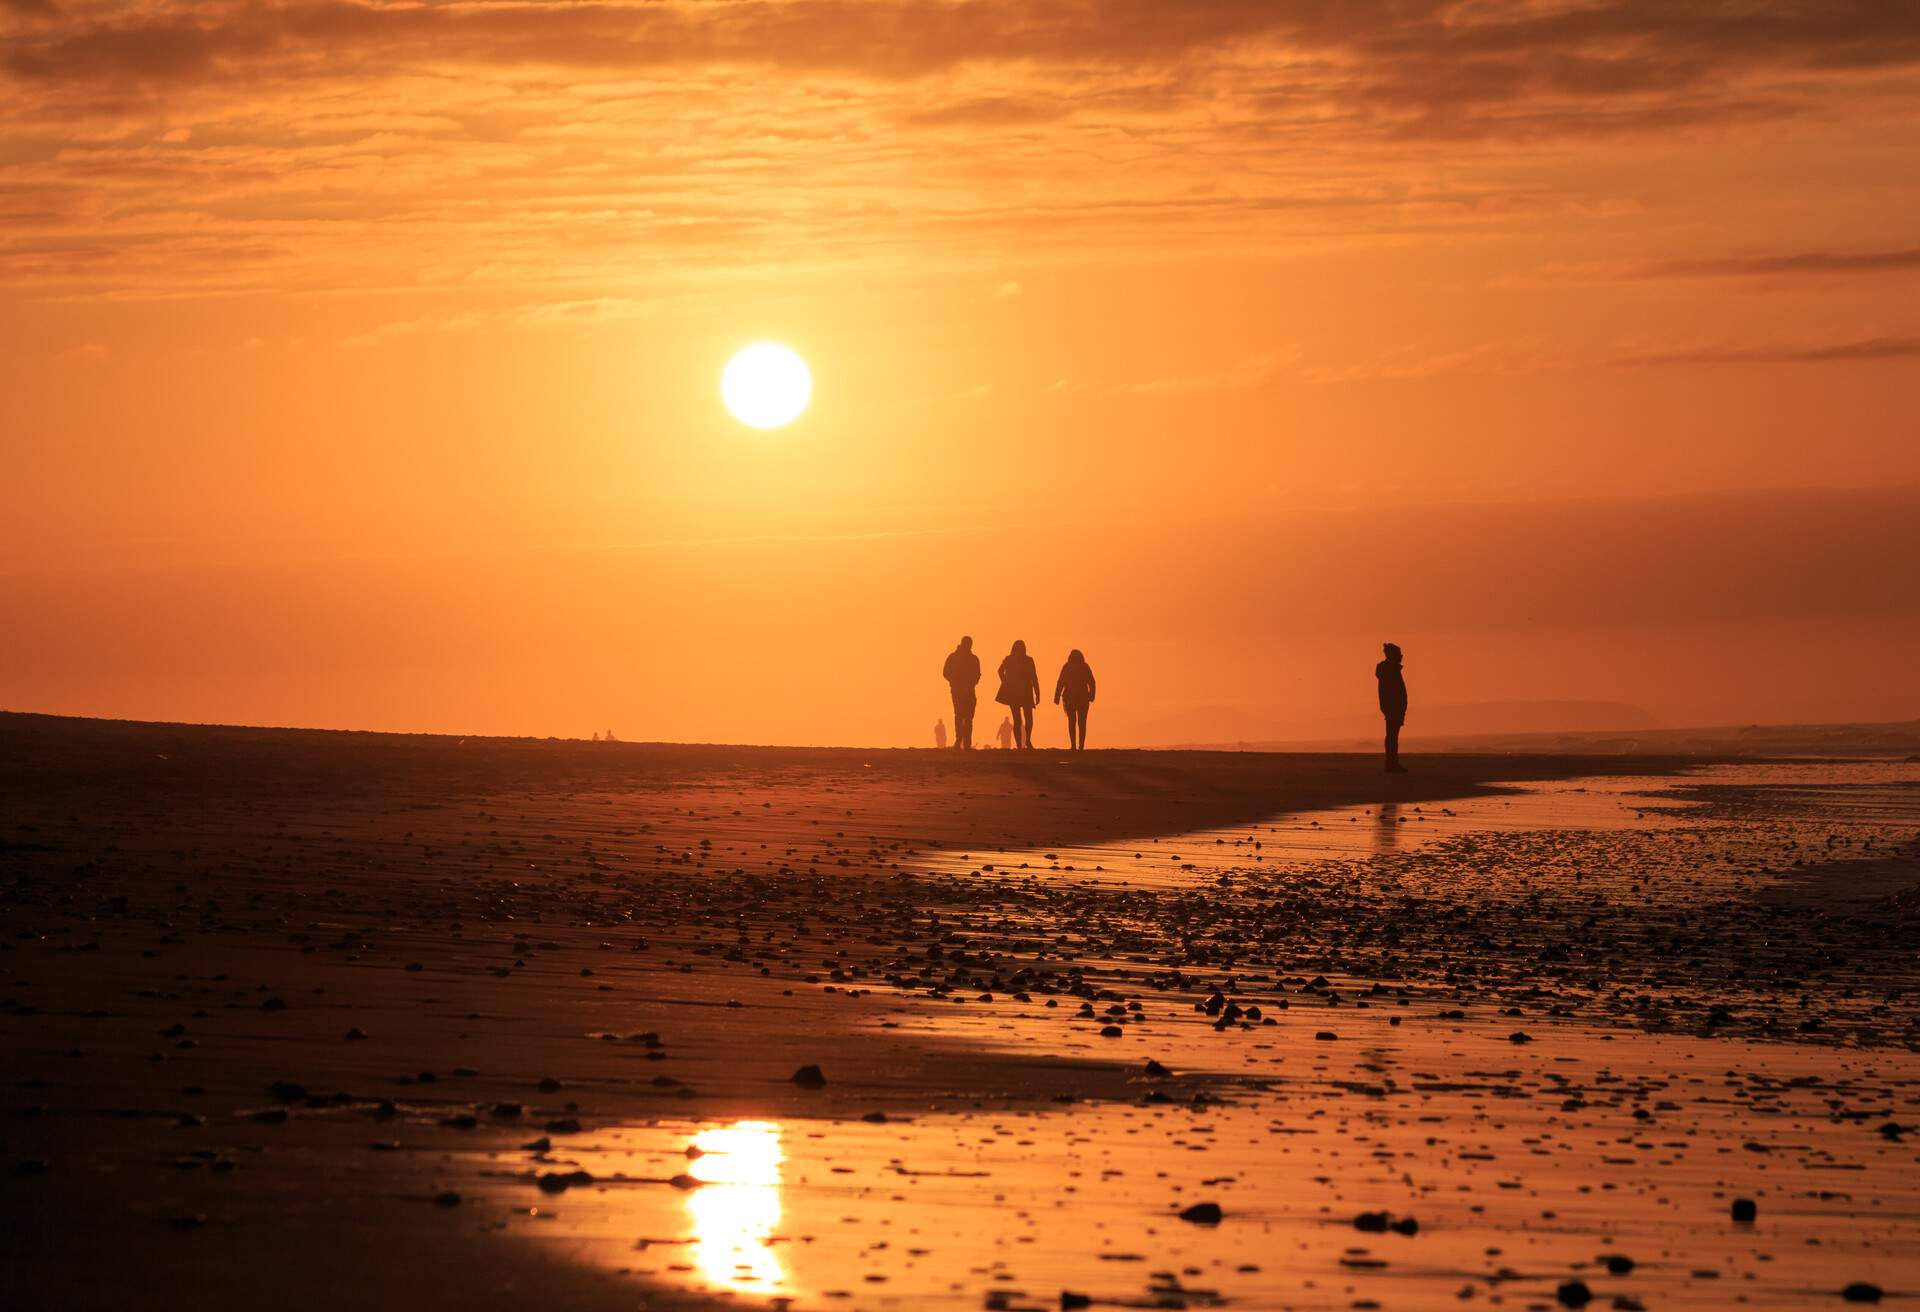 Sunset at Whiterocks Beach, Northern Ireland